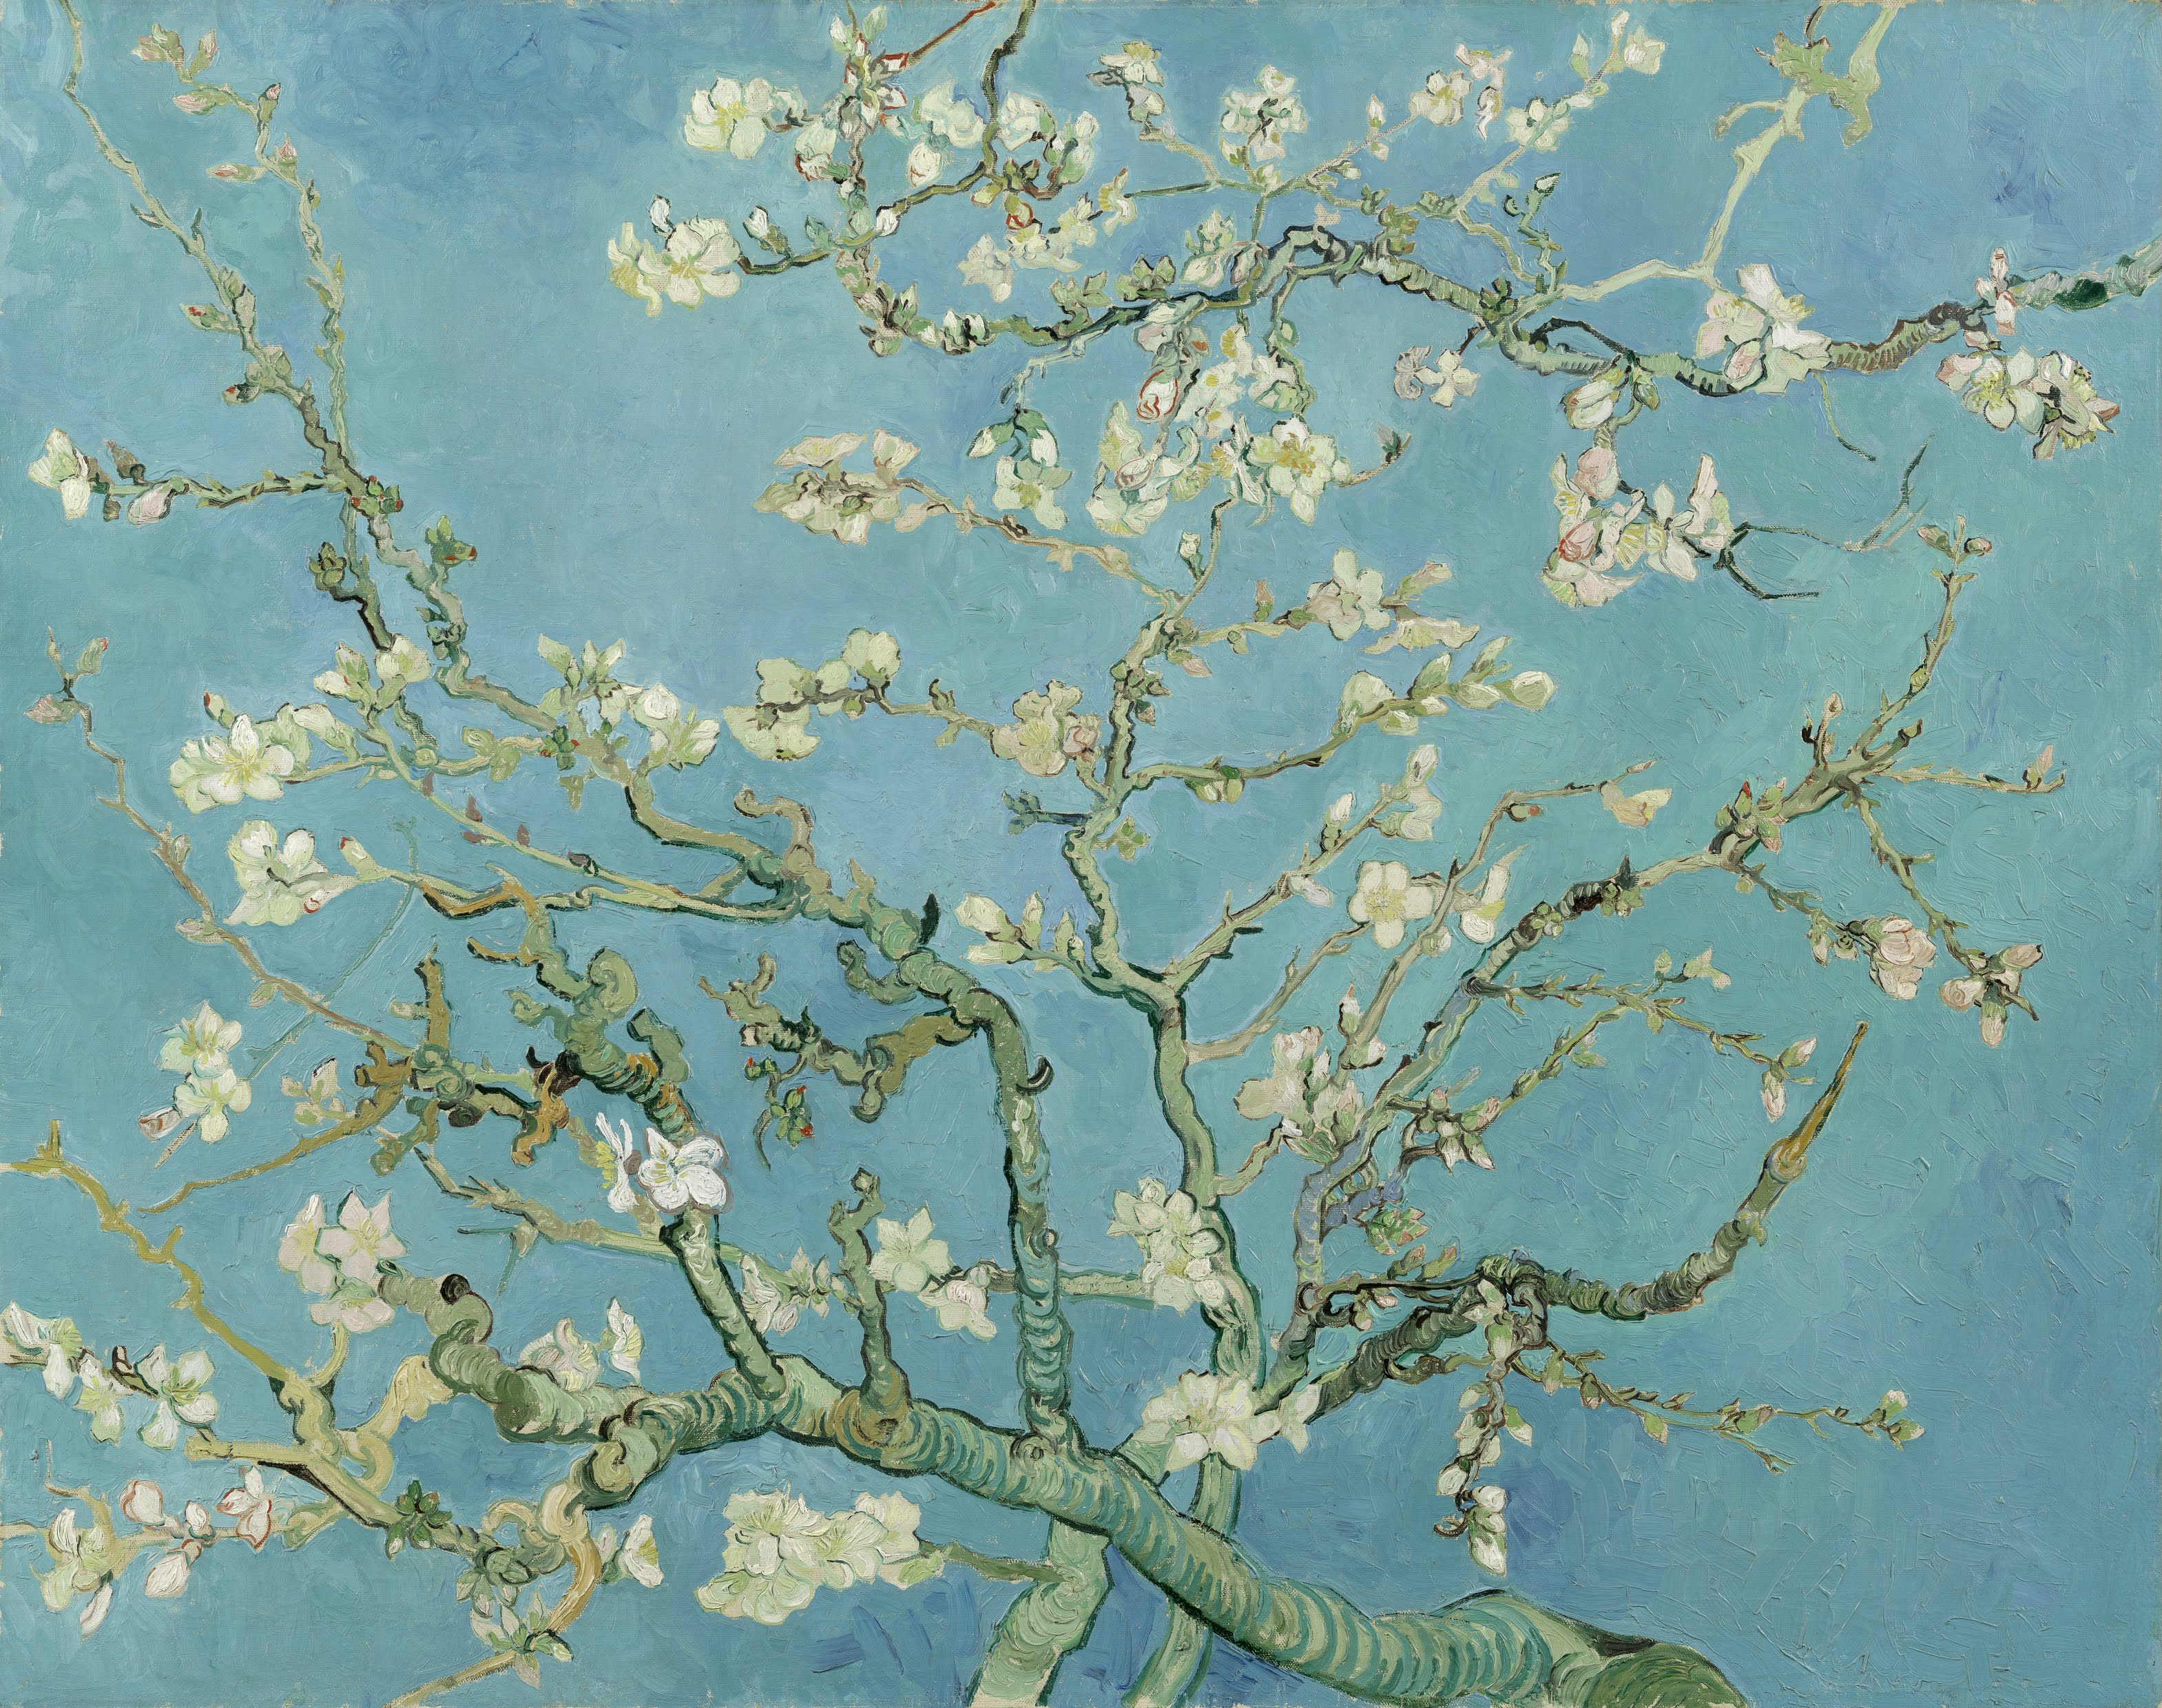 Mandulavirágzás by Vincent van Gogh - 1890 - 74 x 92 cm 